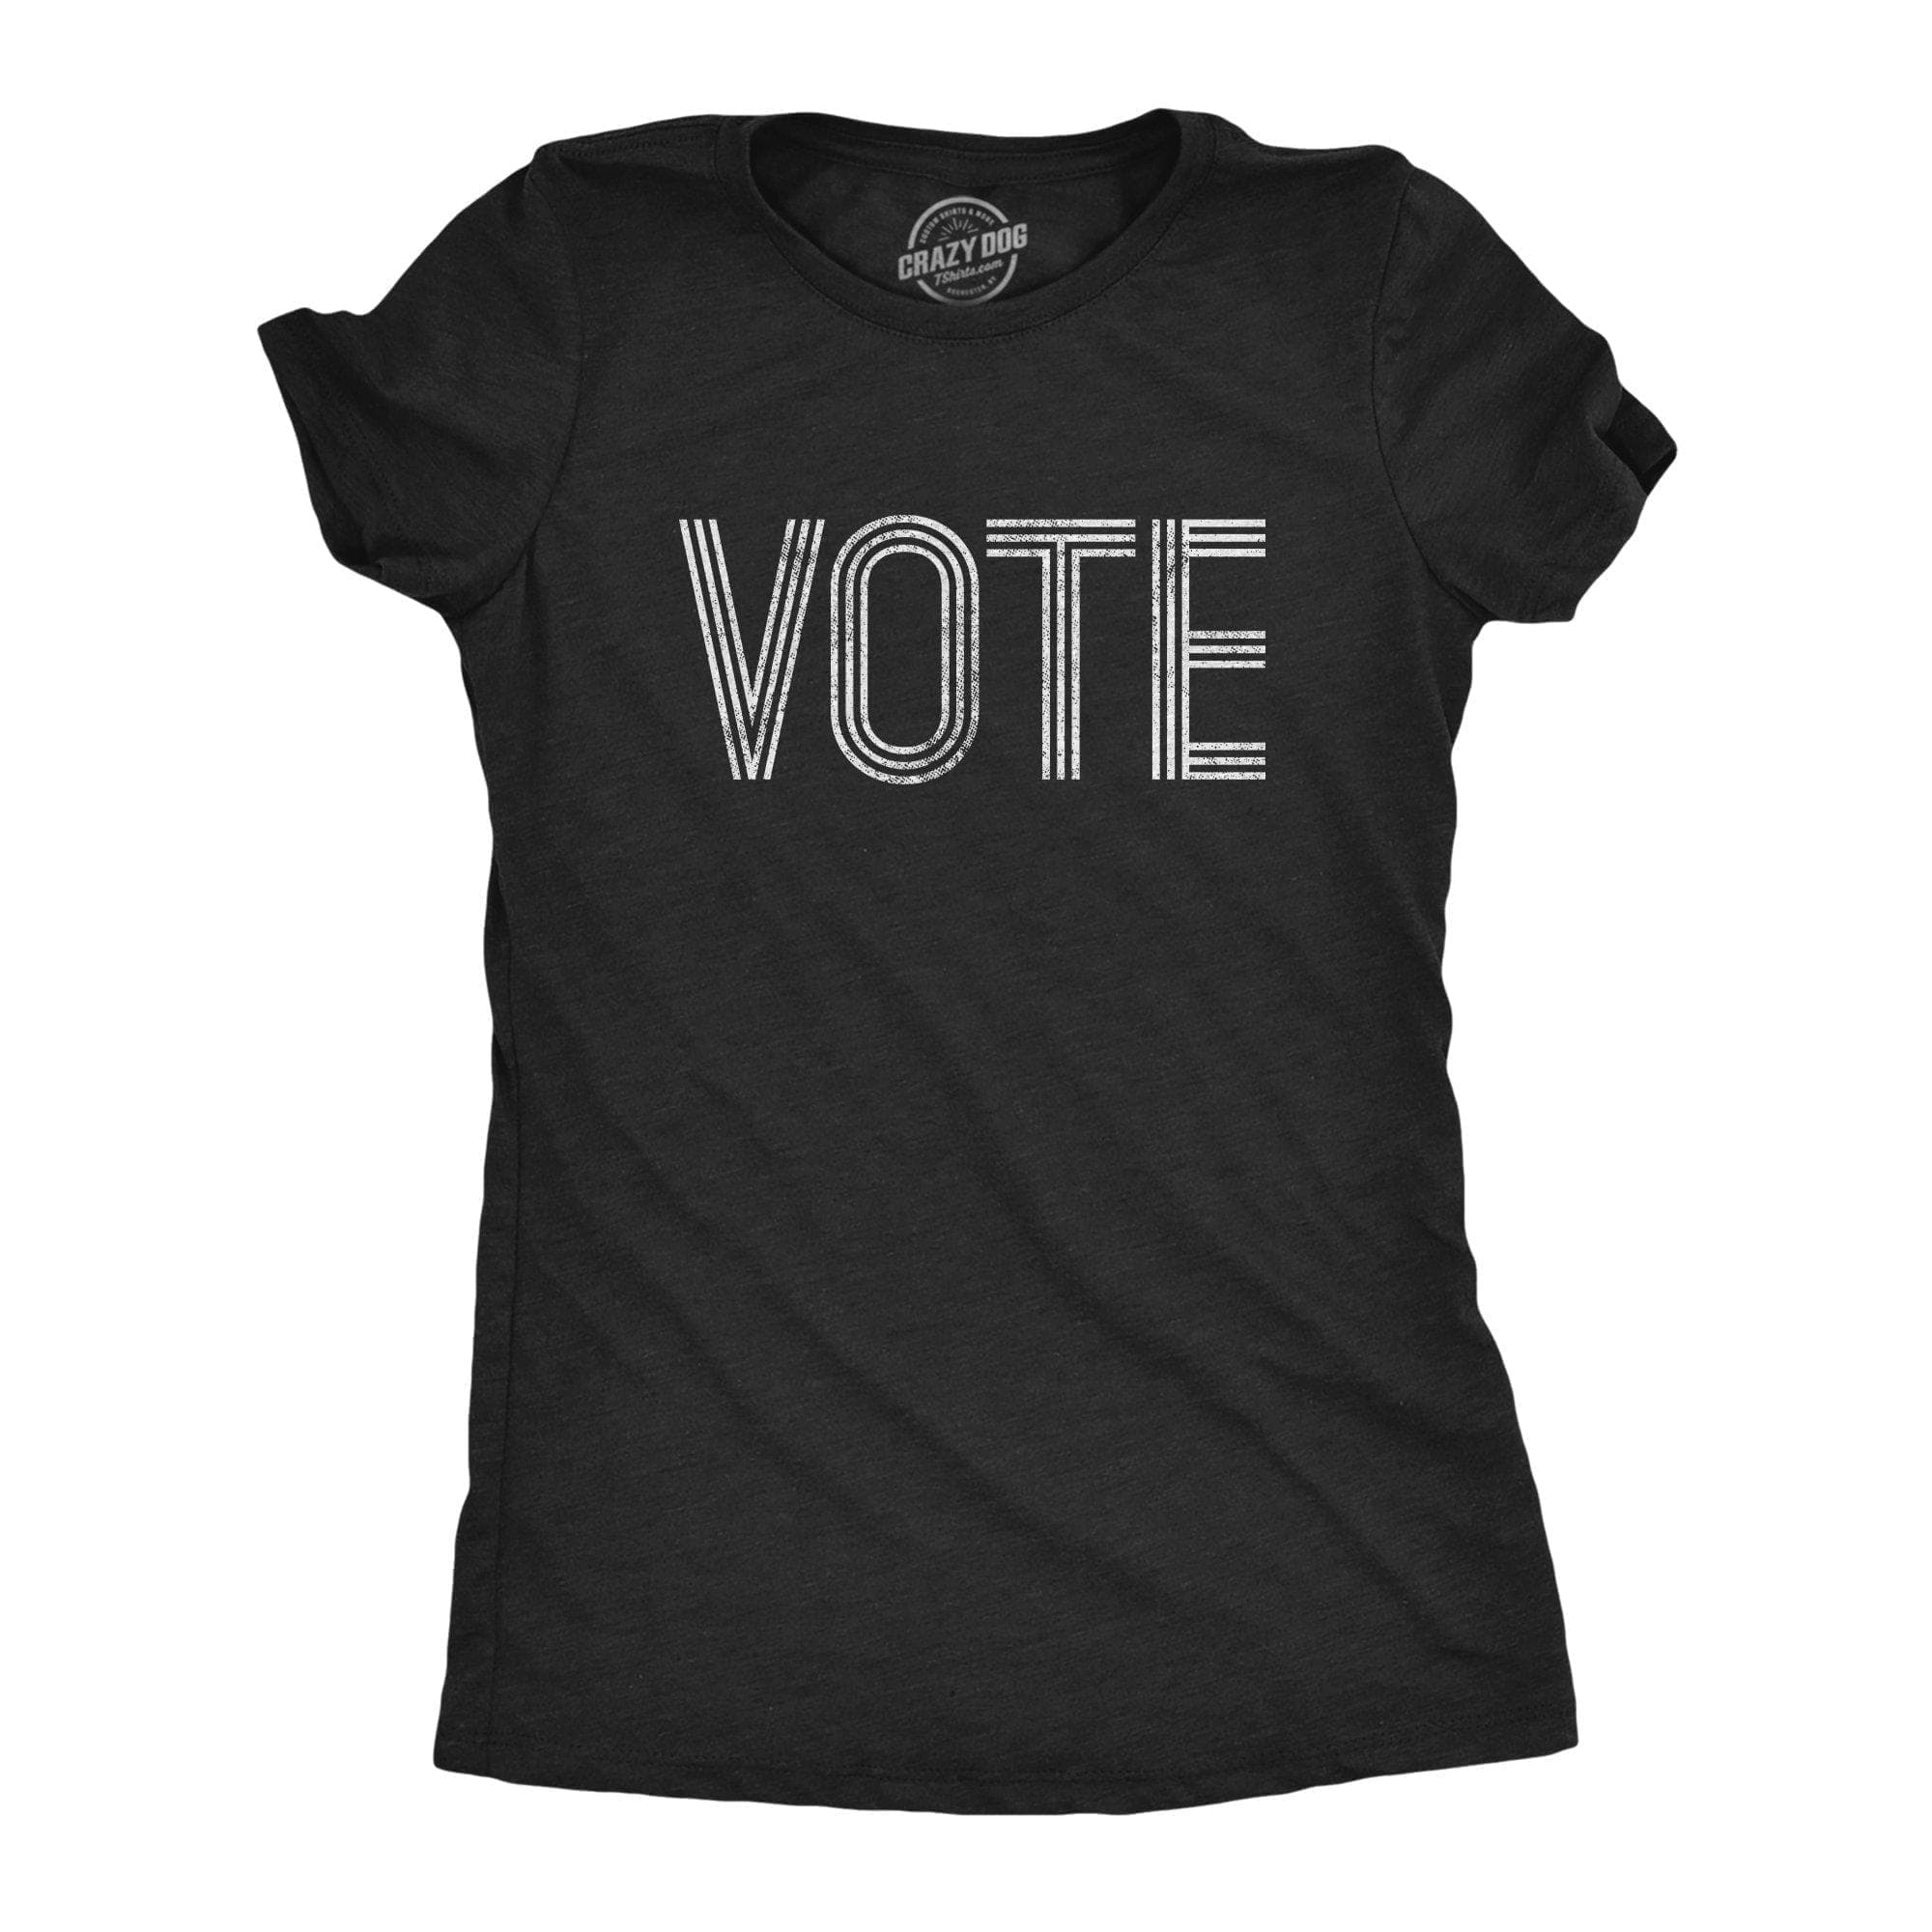 Vote Women's Tshirt - Crazy Dog T-Shirts